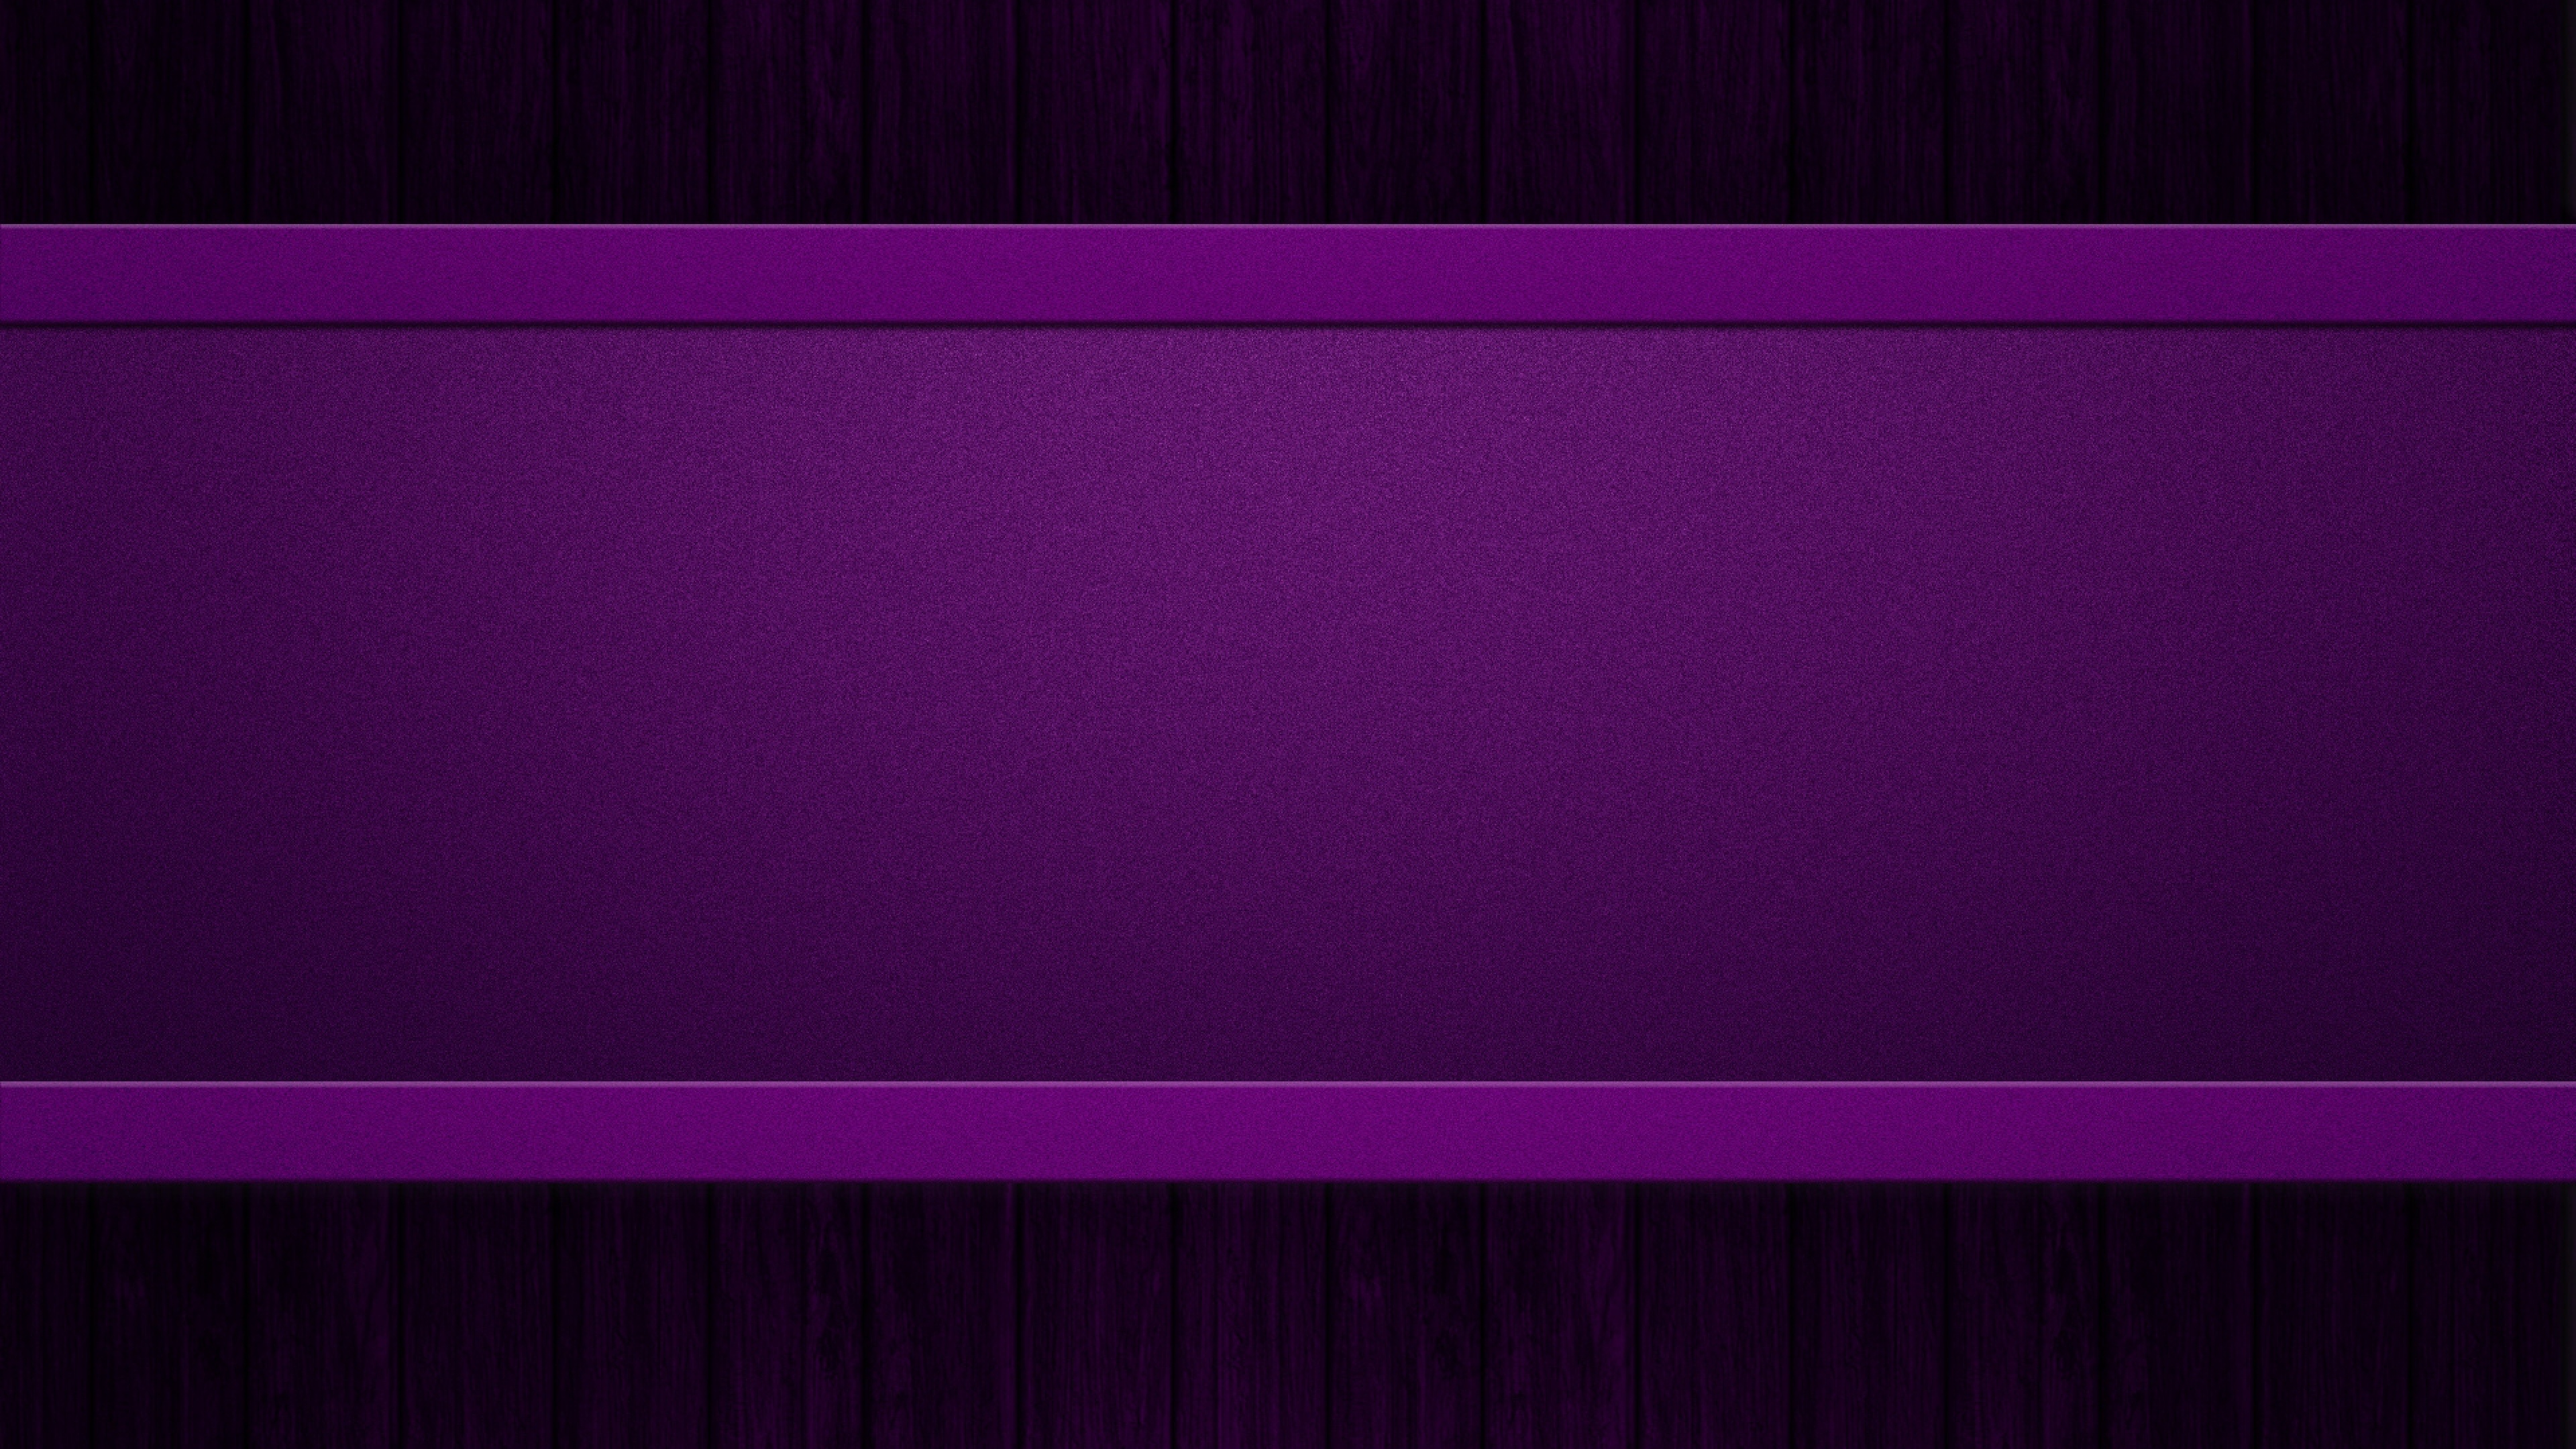 4K Purple Wallpapers High Quality | Download Free - 3840 x 2160 jpeg 3055kB